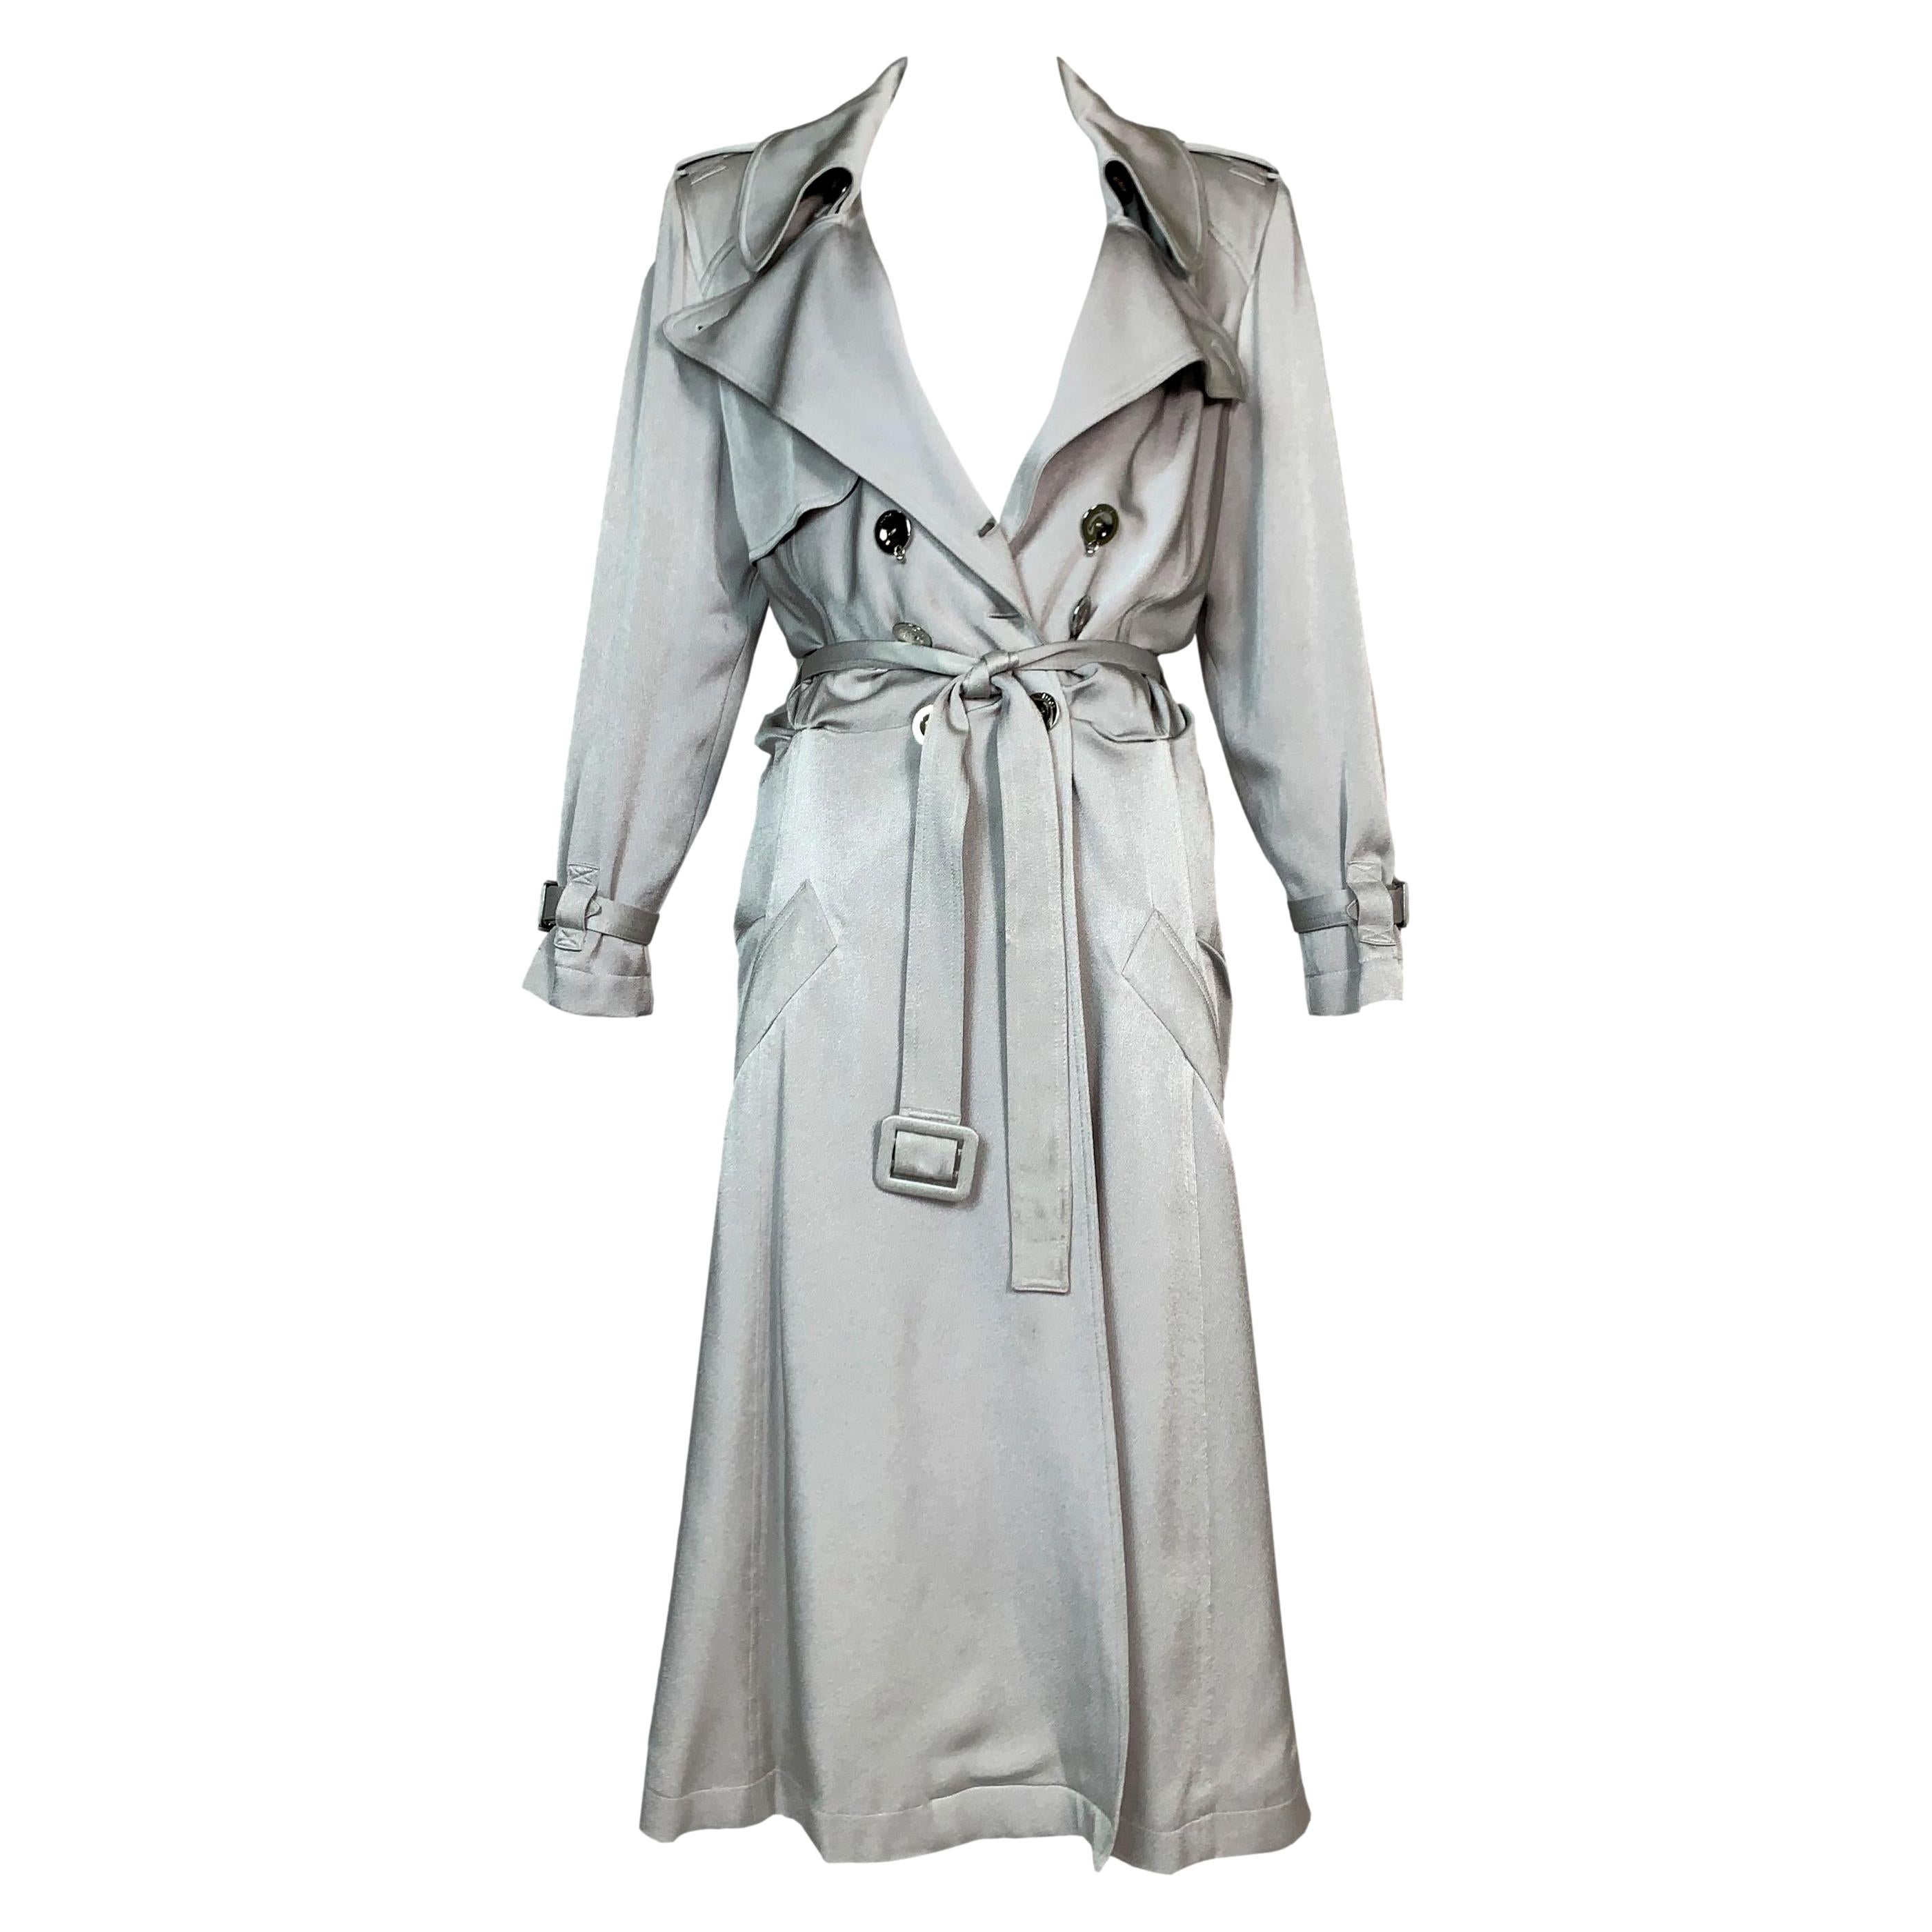 S/S 2004 Christian Dior by John Galliano Silver Satin Trench Coat Jacket